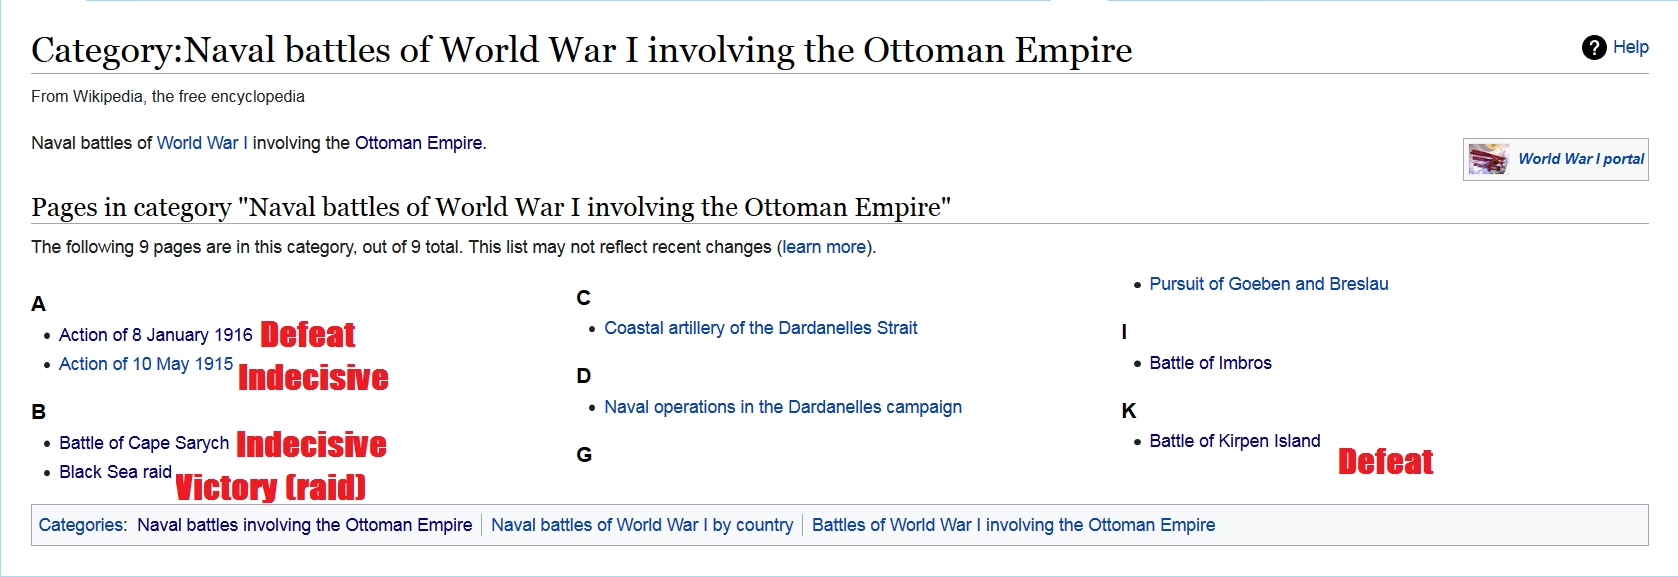 Screenshot_2021-11-12 Category Naval battles of World War I involving the Ottoman Empire - Wik...png